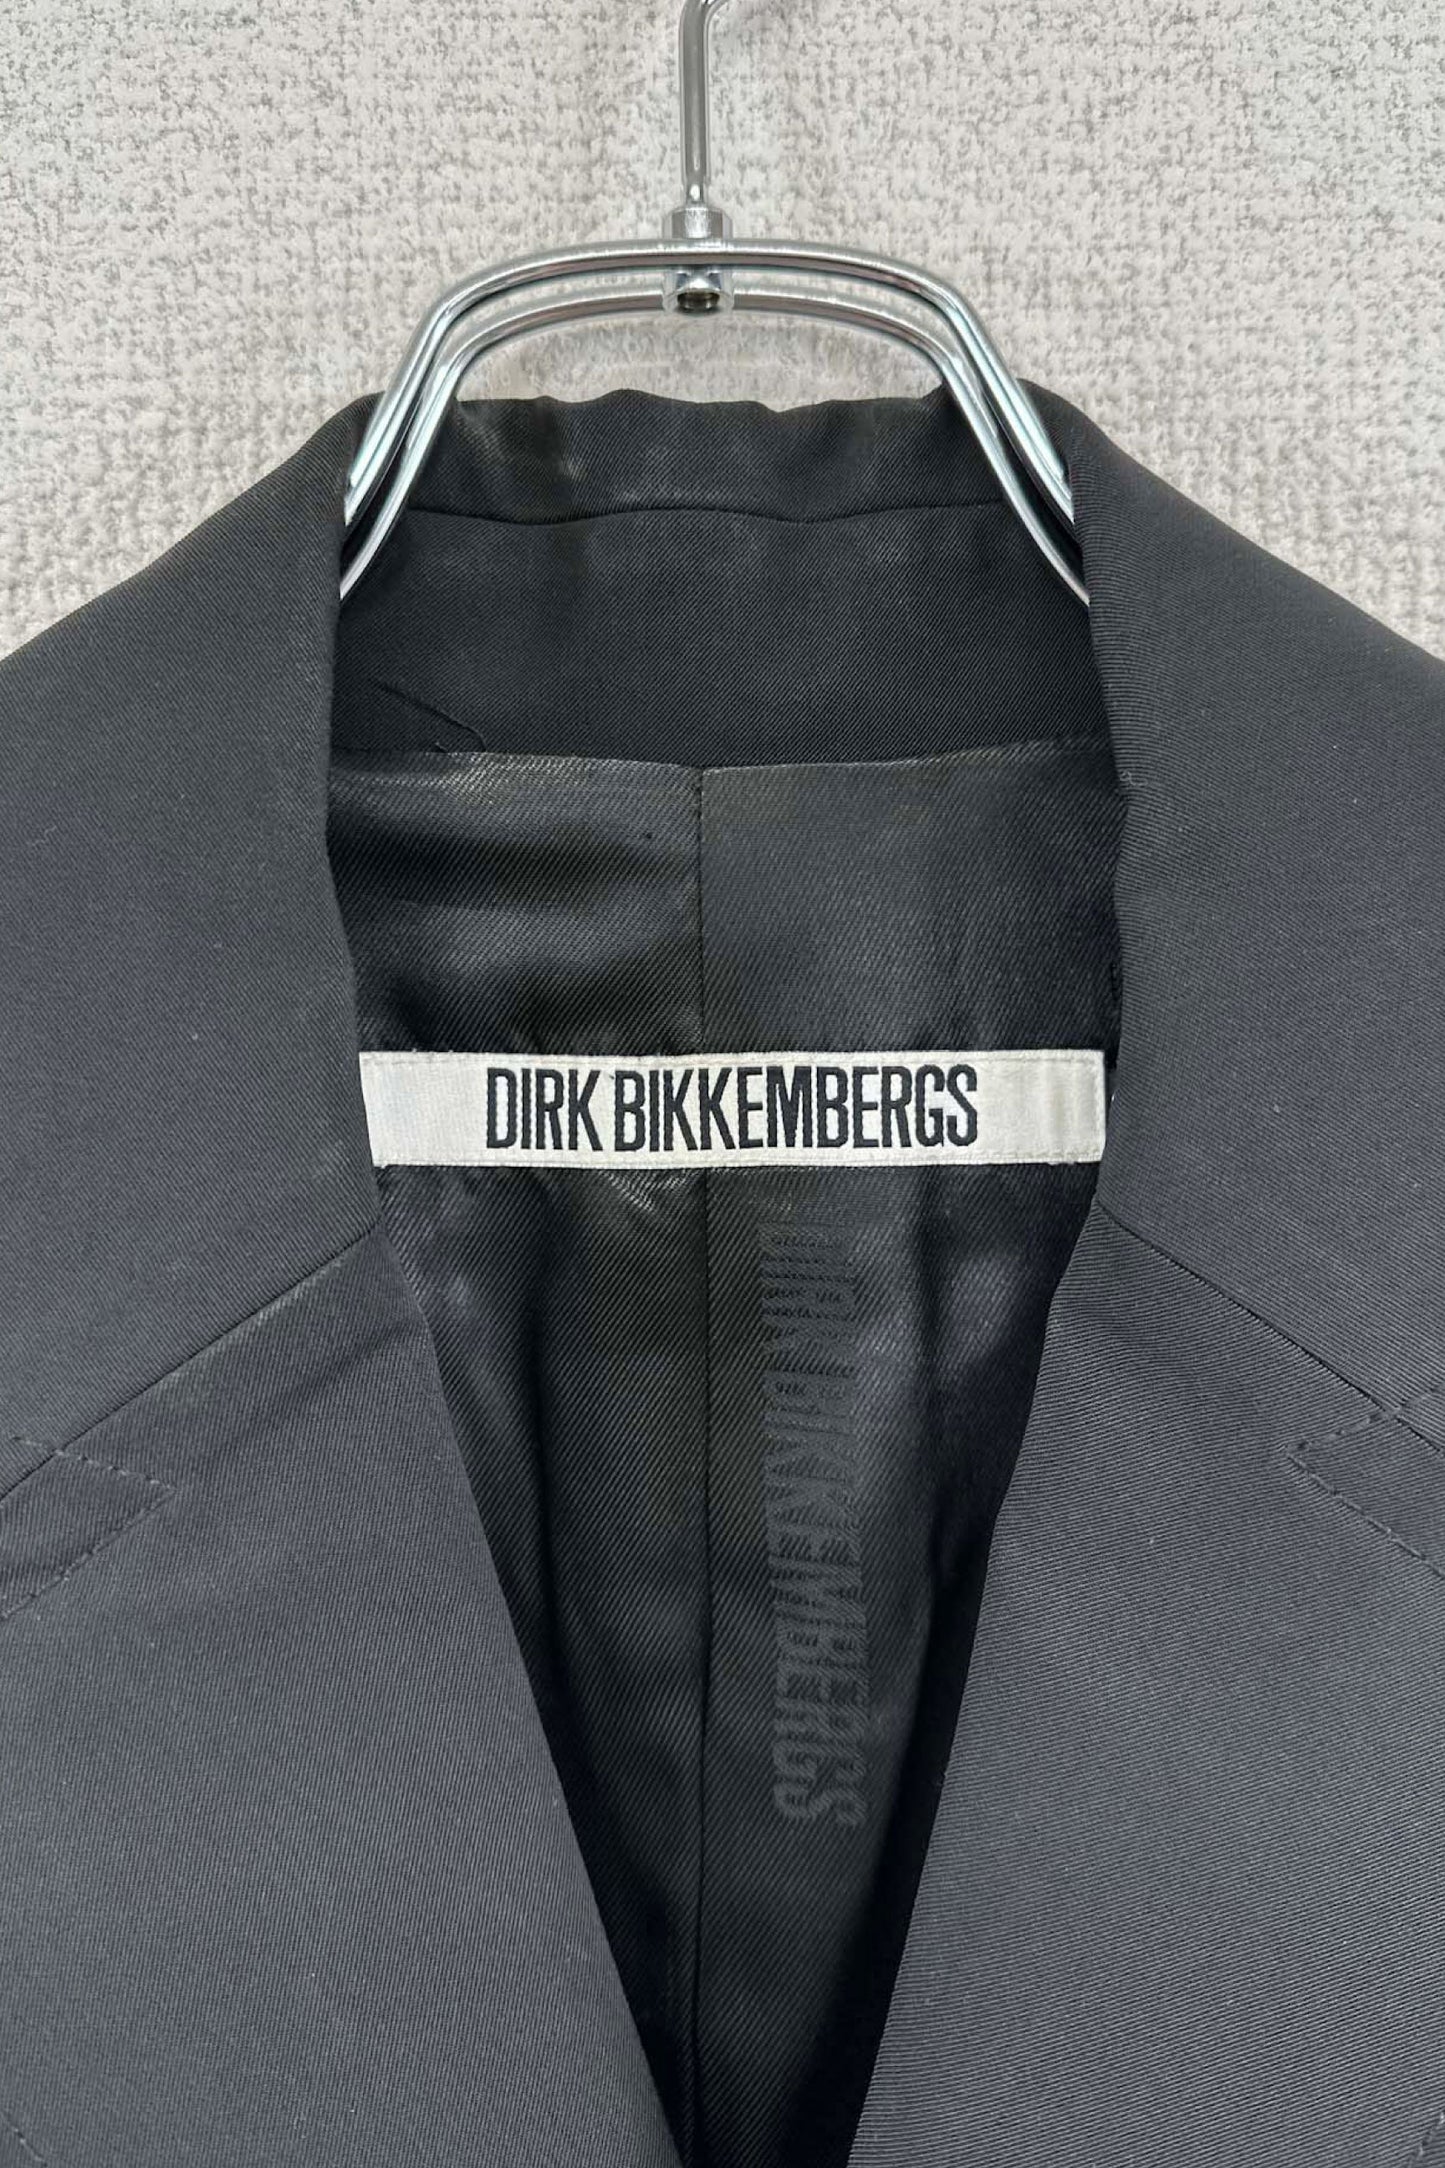 Made in ITALY DIRK BIKKEMBERGS black jacket